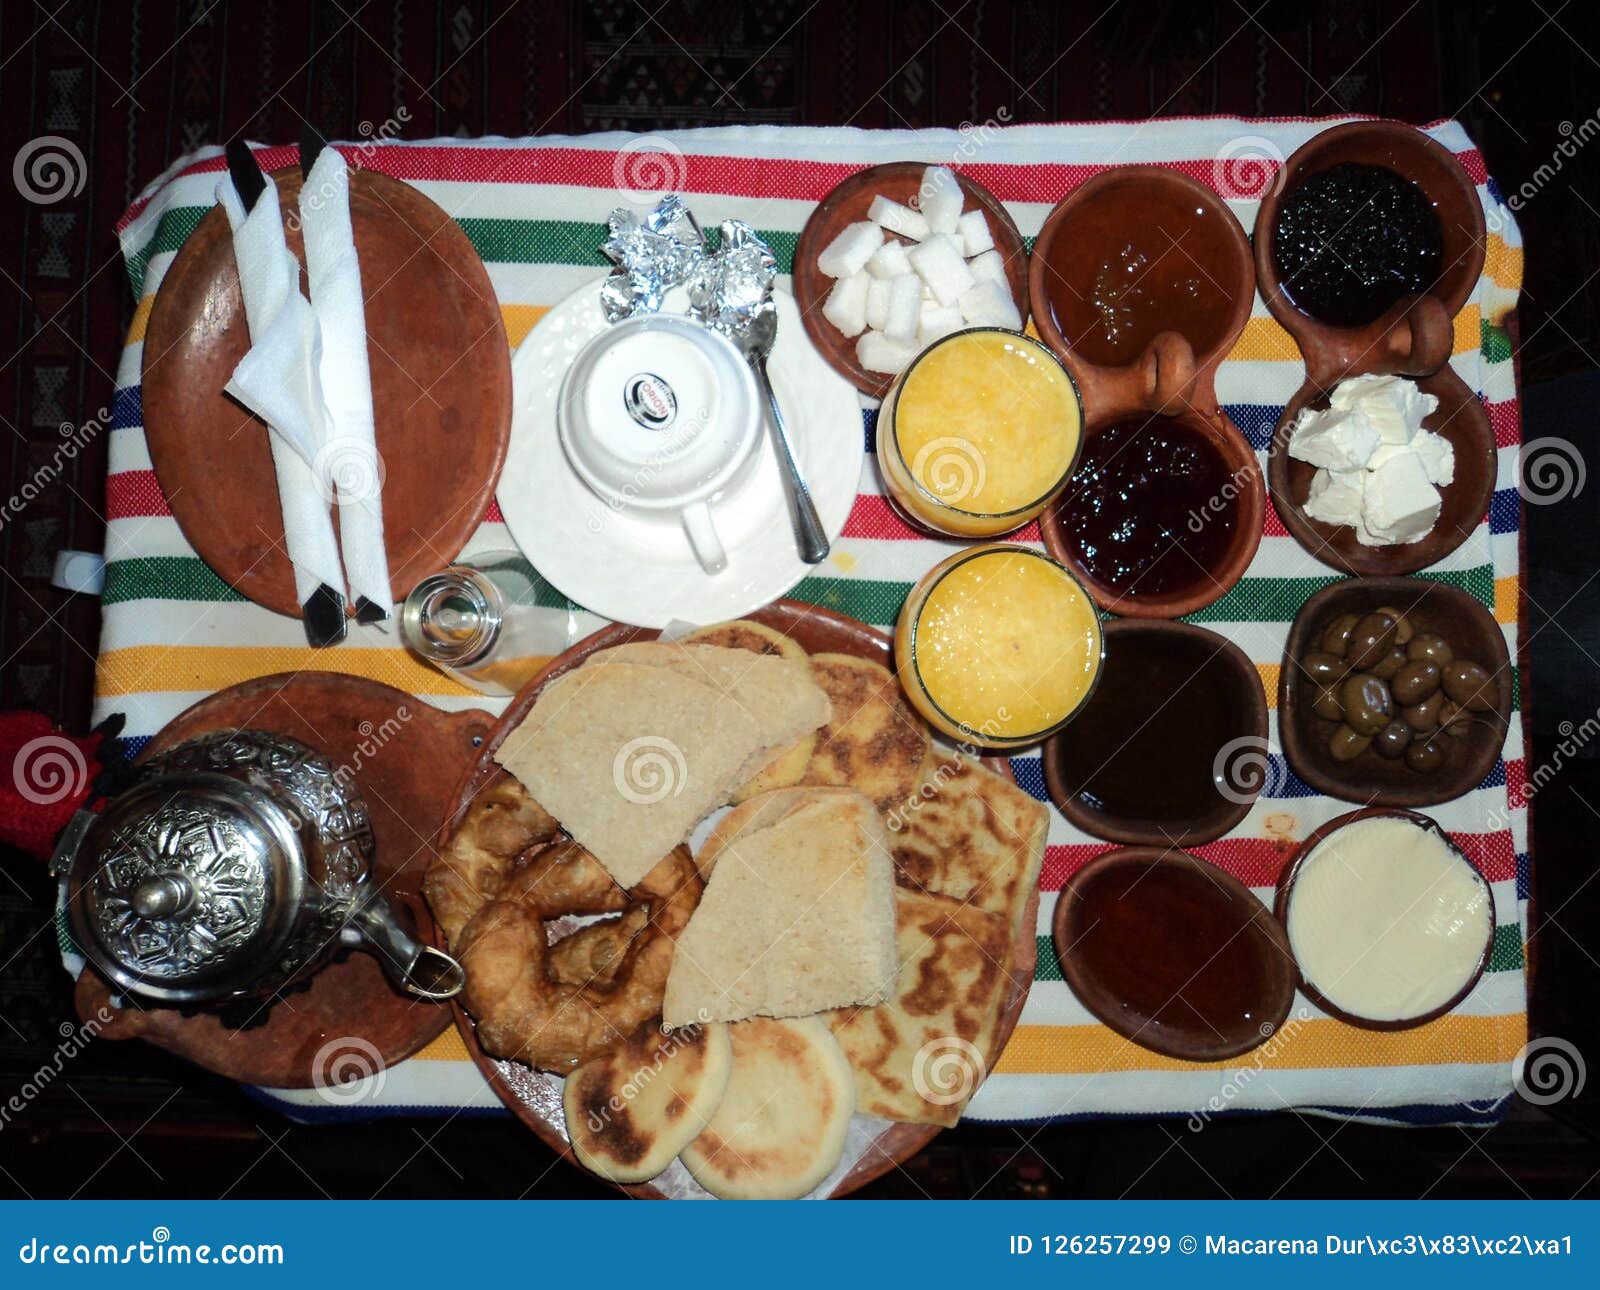 breakfast in morocco/desayuno en marruecos